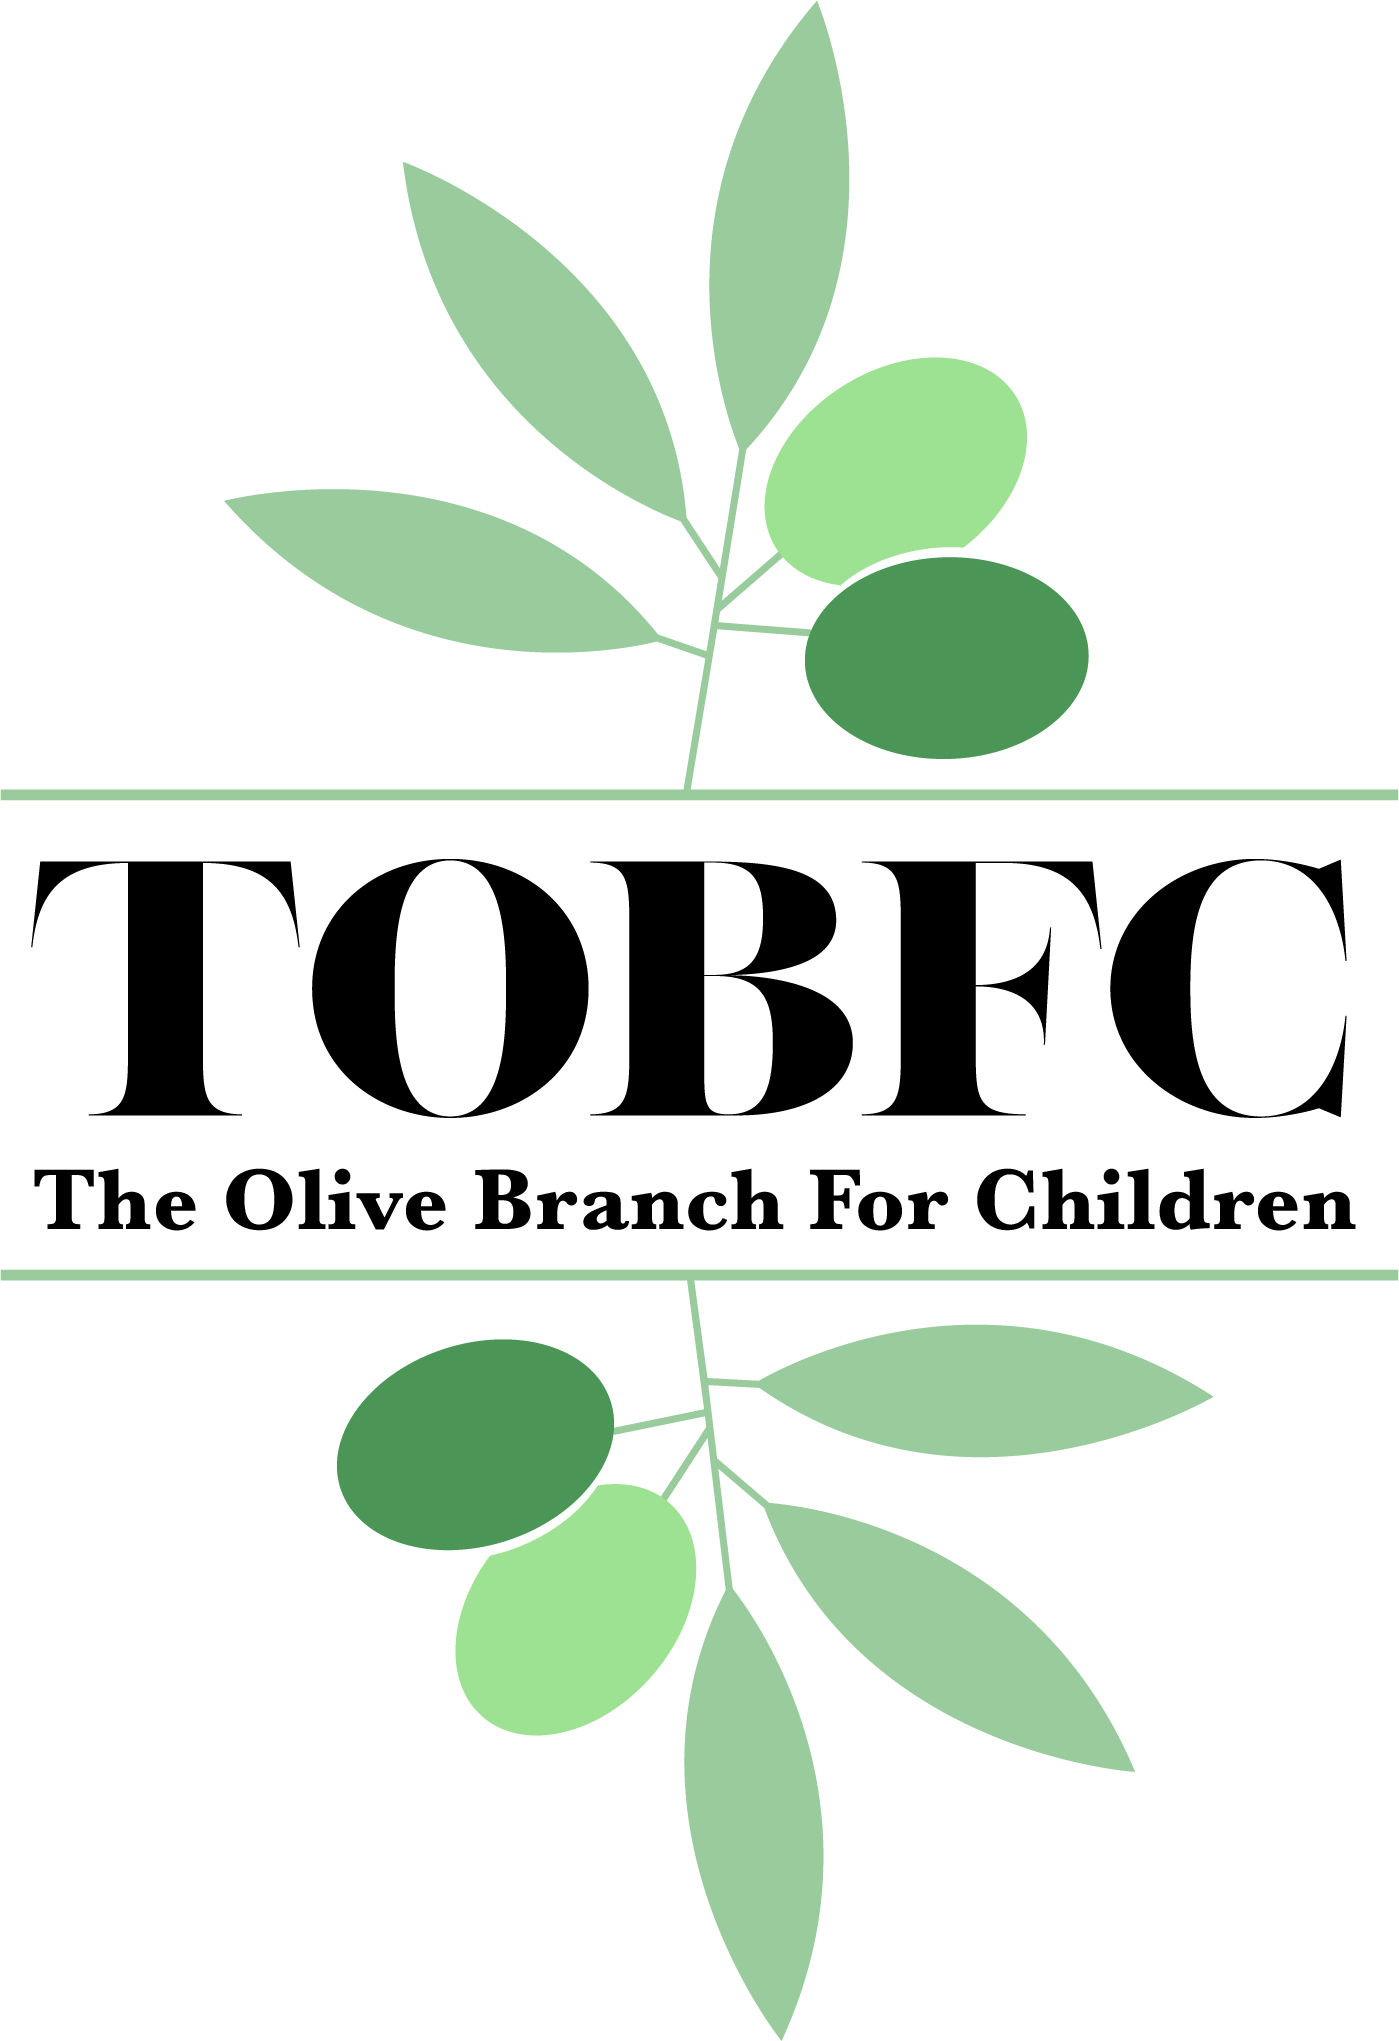 The Olive Branch for Children logo